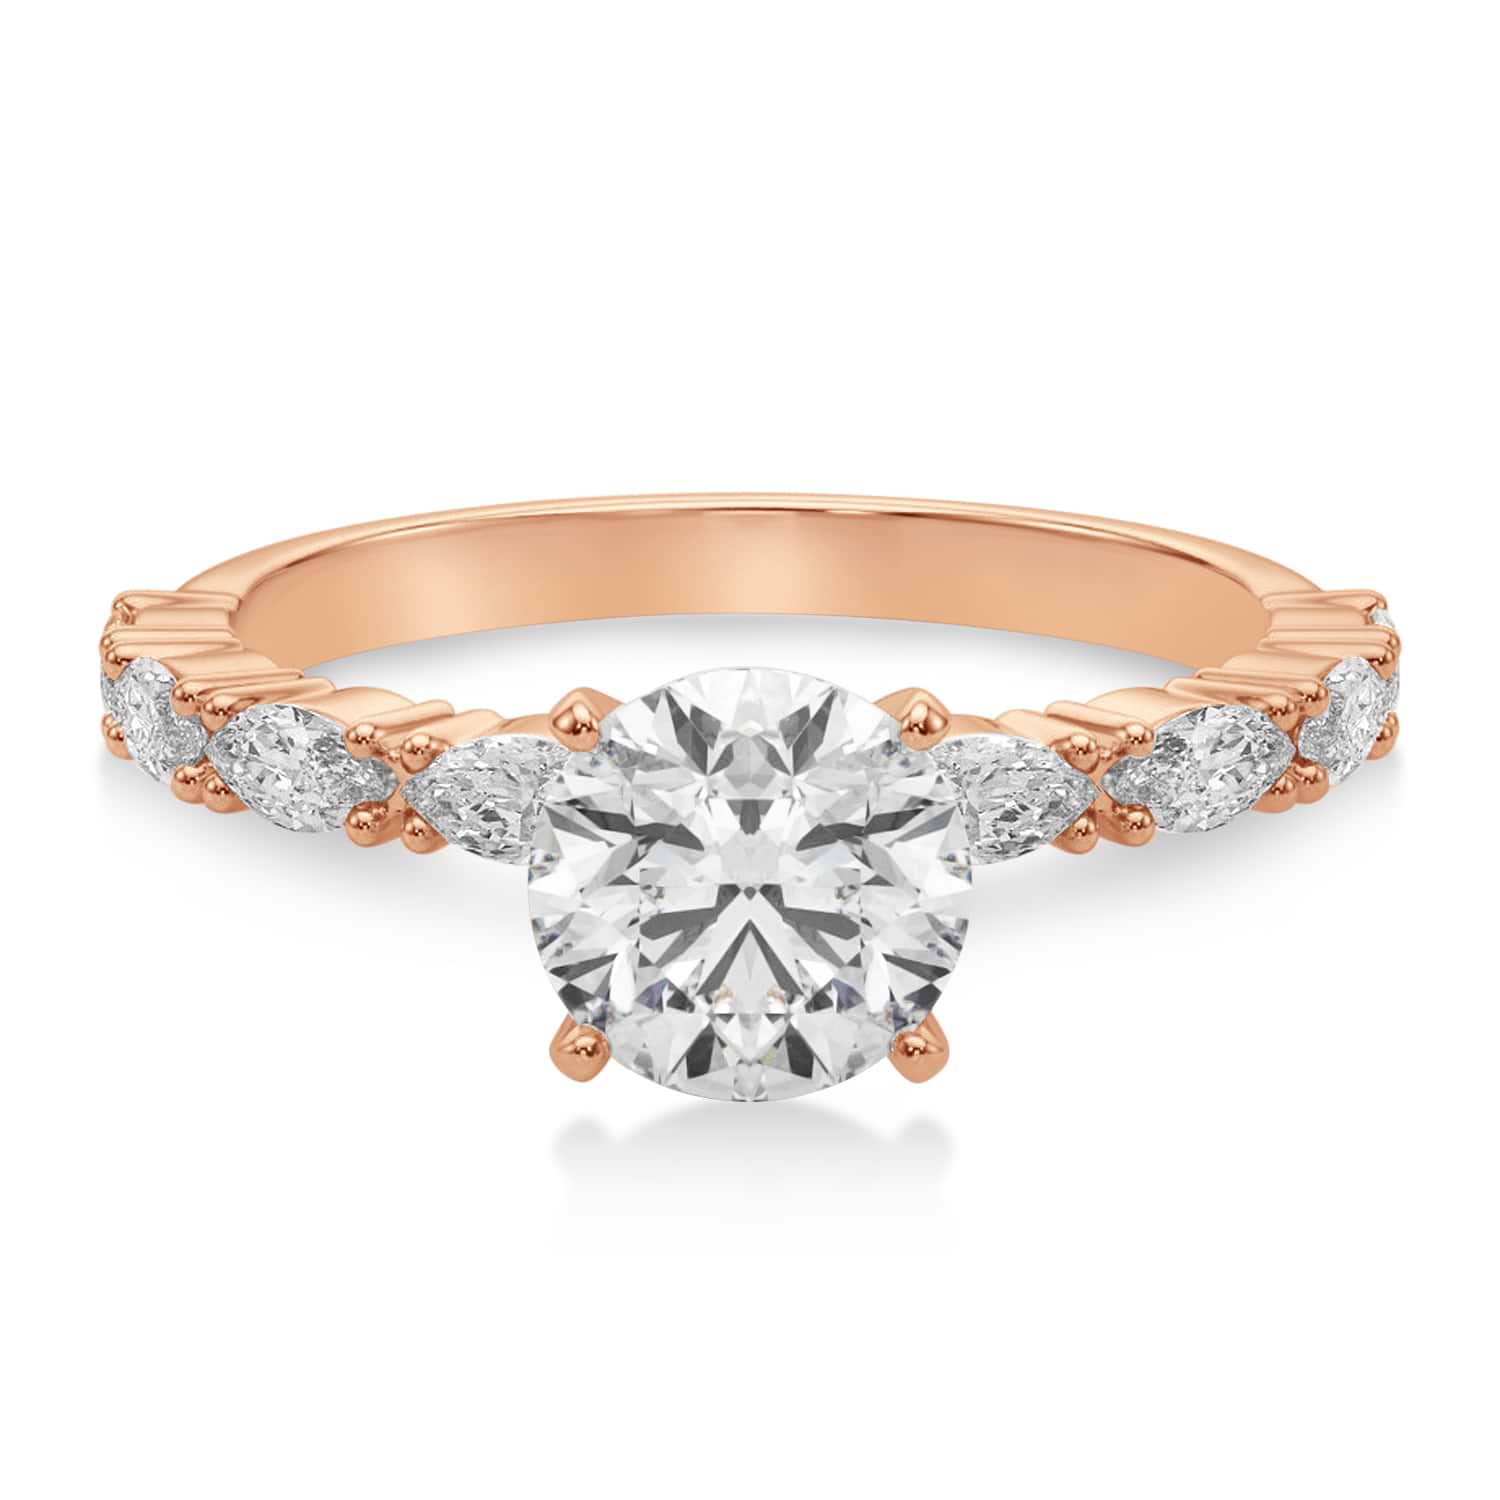 Lab Grown Diamond Marquise Engagement Ring 14k Rose Gold (0.63ct)